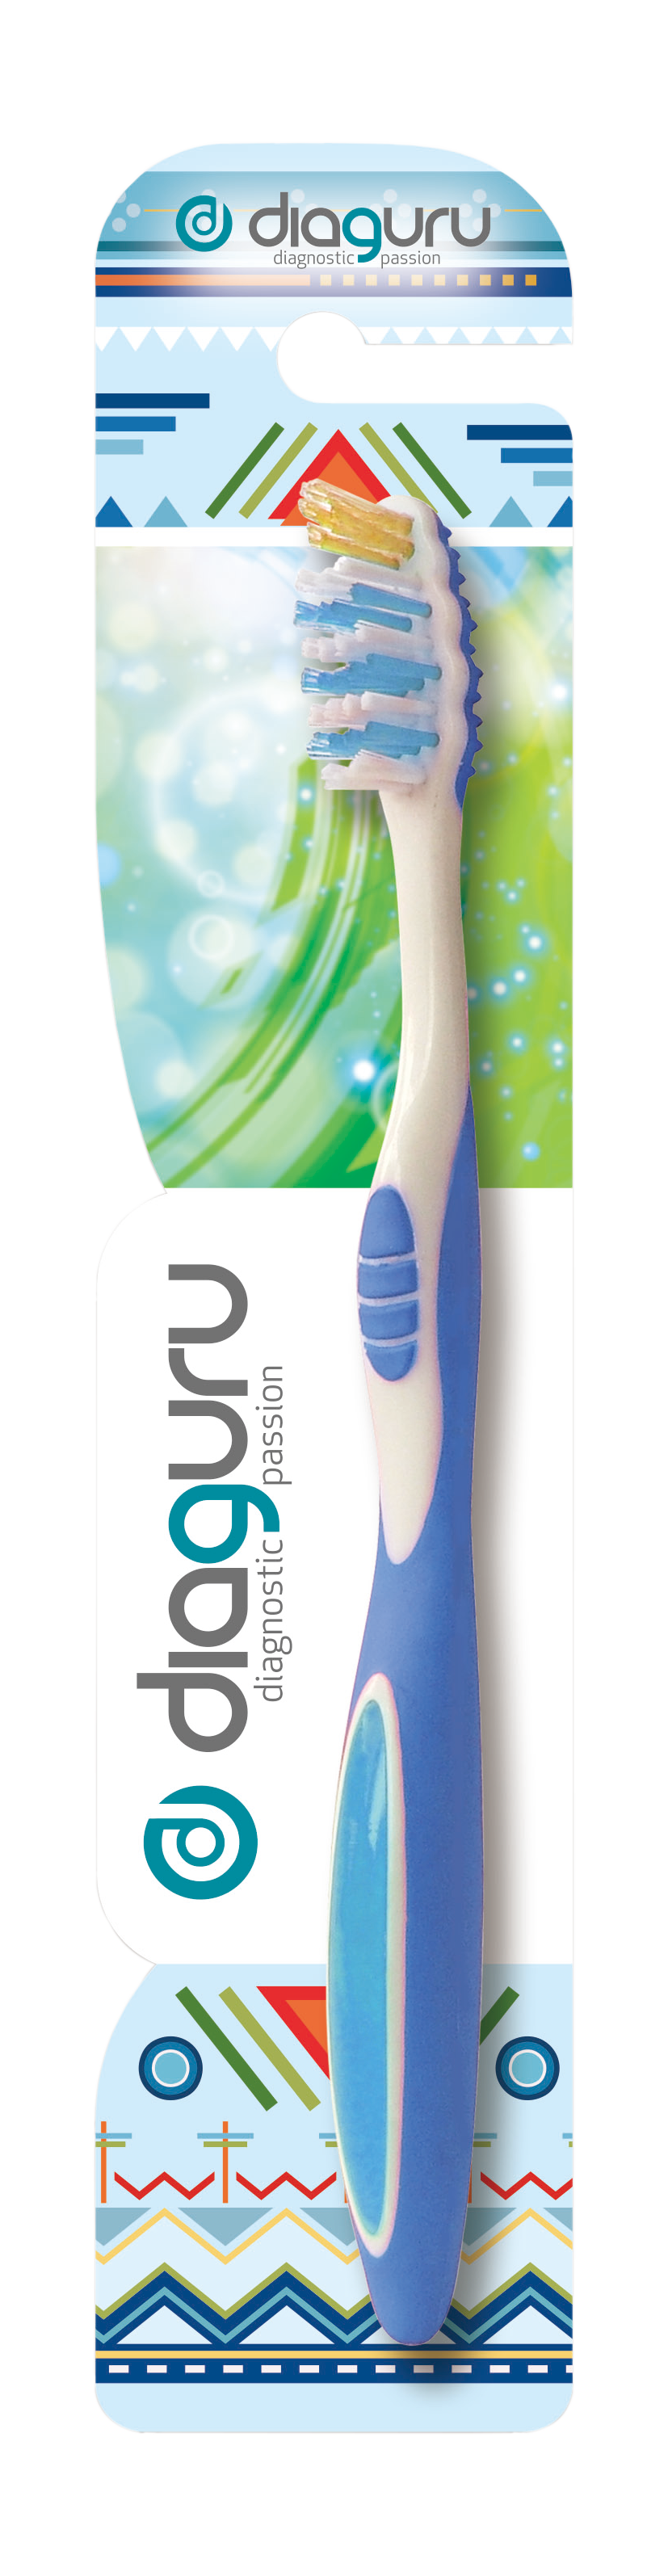 Diaguru Seasonal Toothbrushes, Blue Winter Box/12